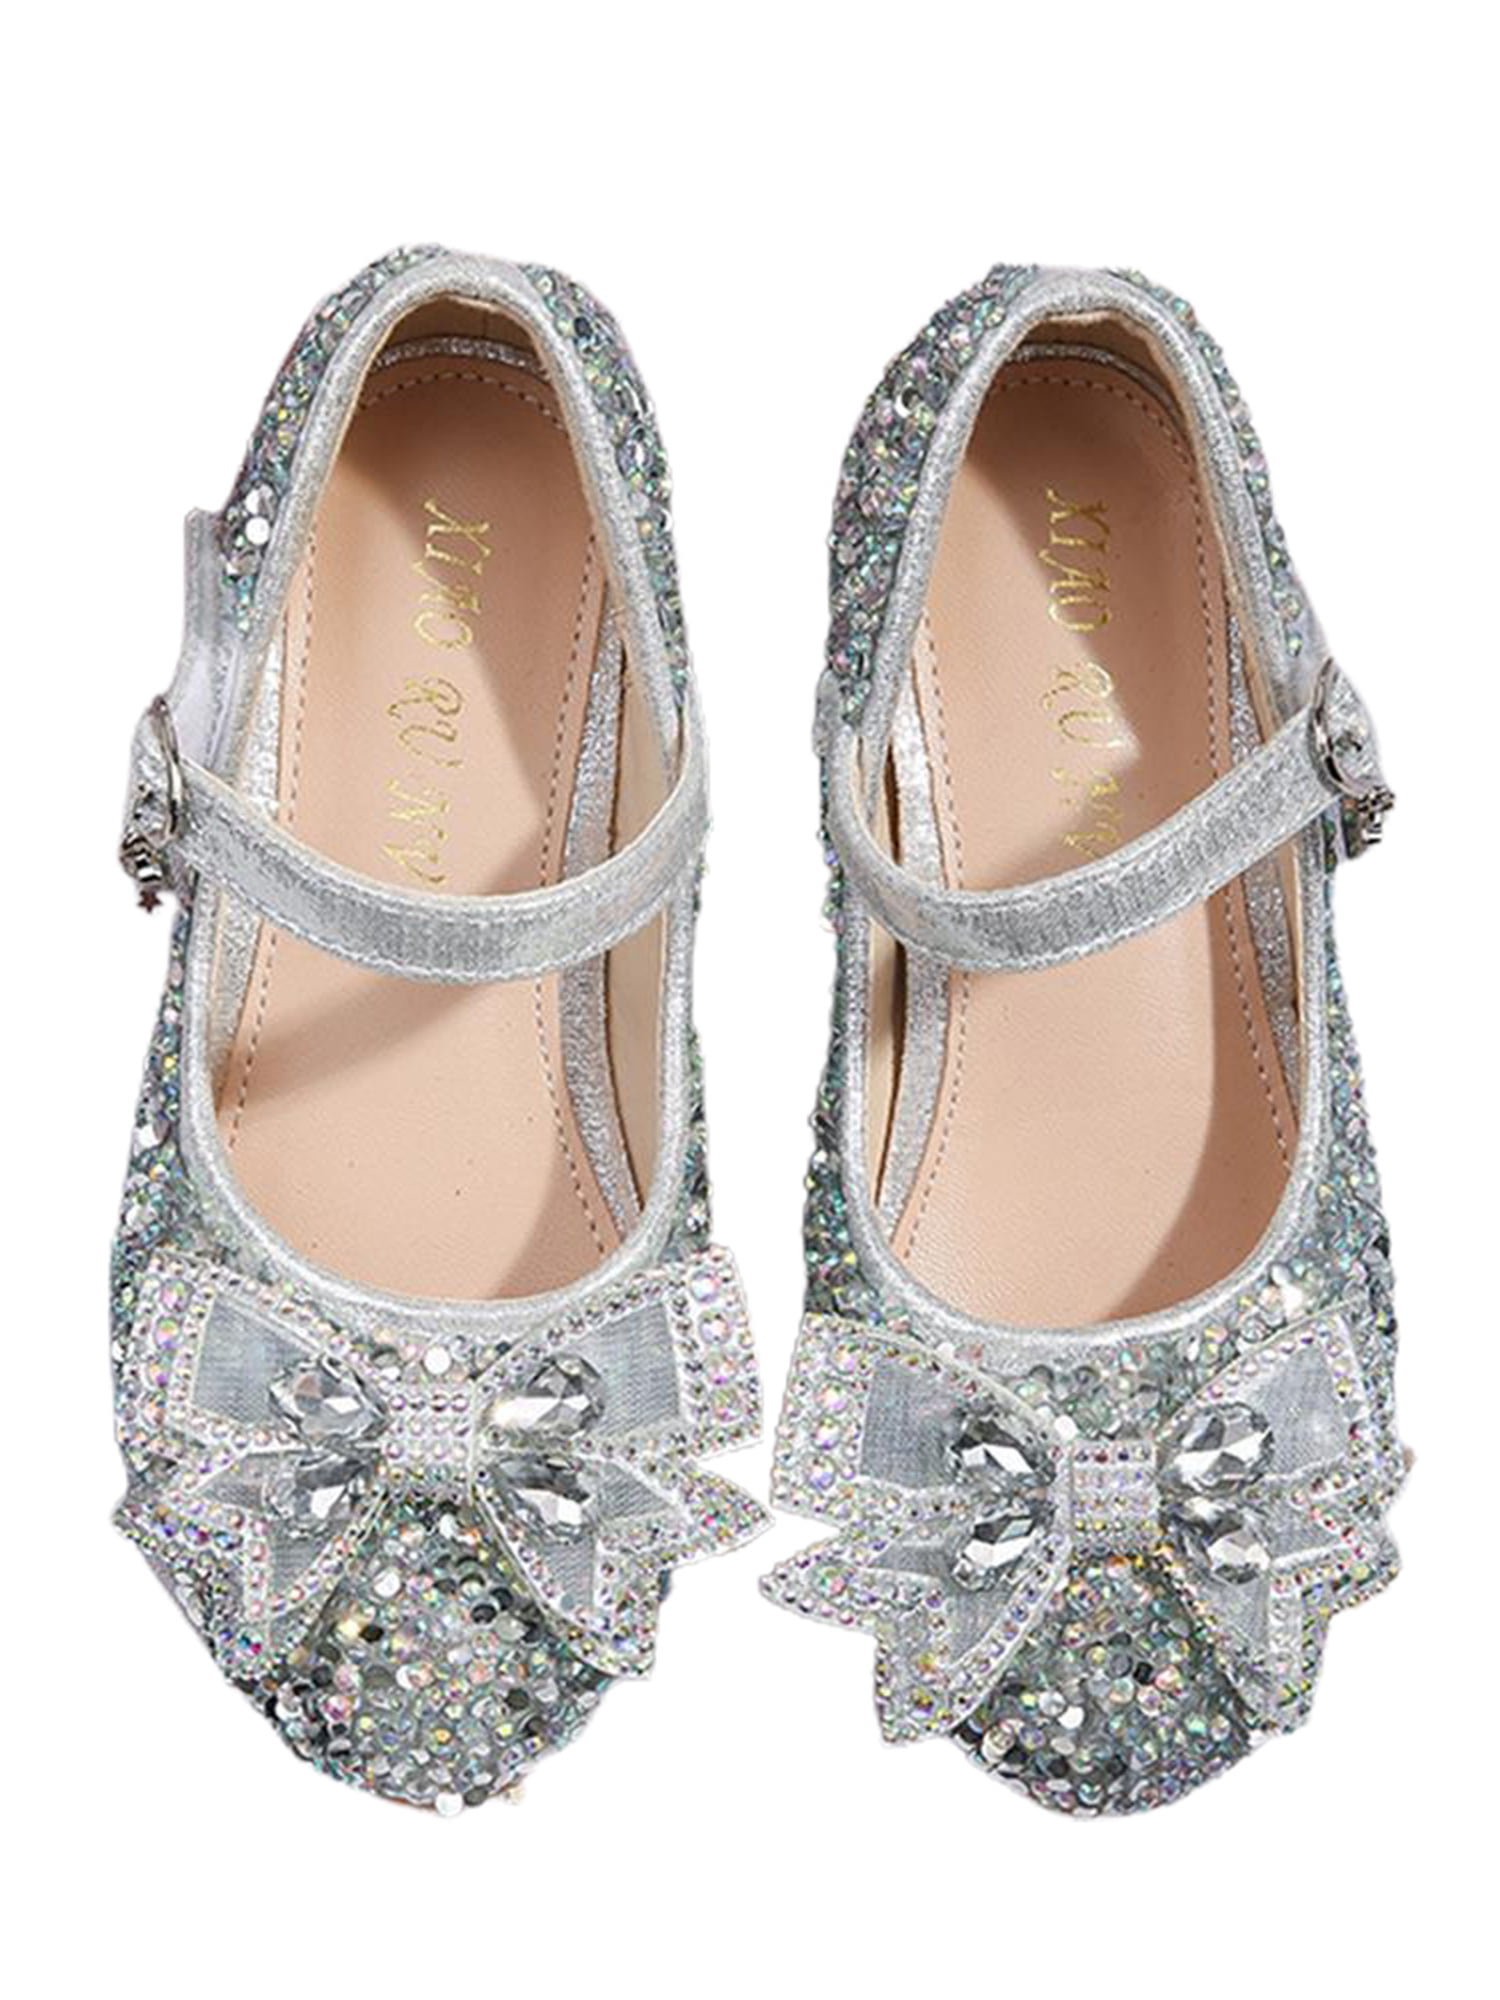 Kids Girls Child Glitter Sandals Bowknot Wedding Bridesmaid Party Princess Shoes